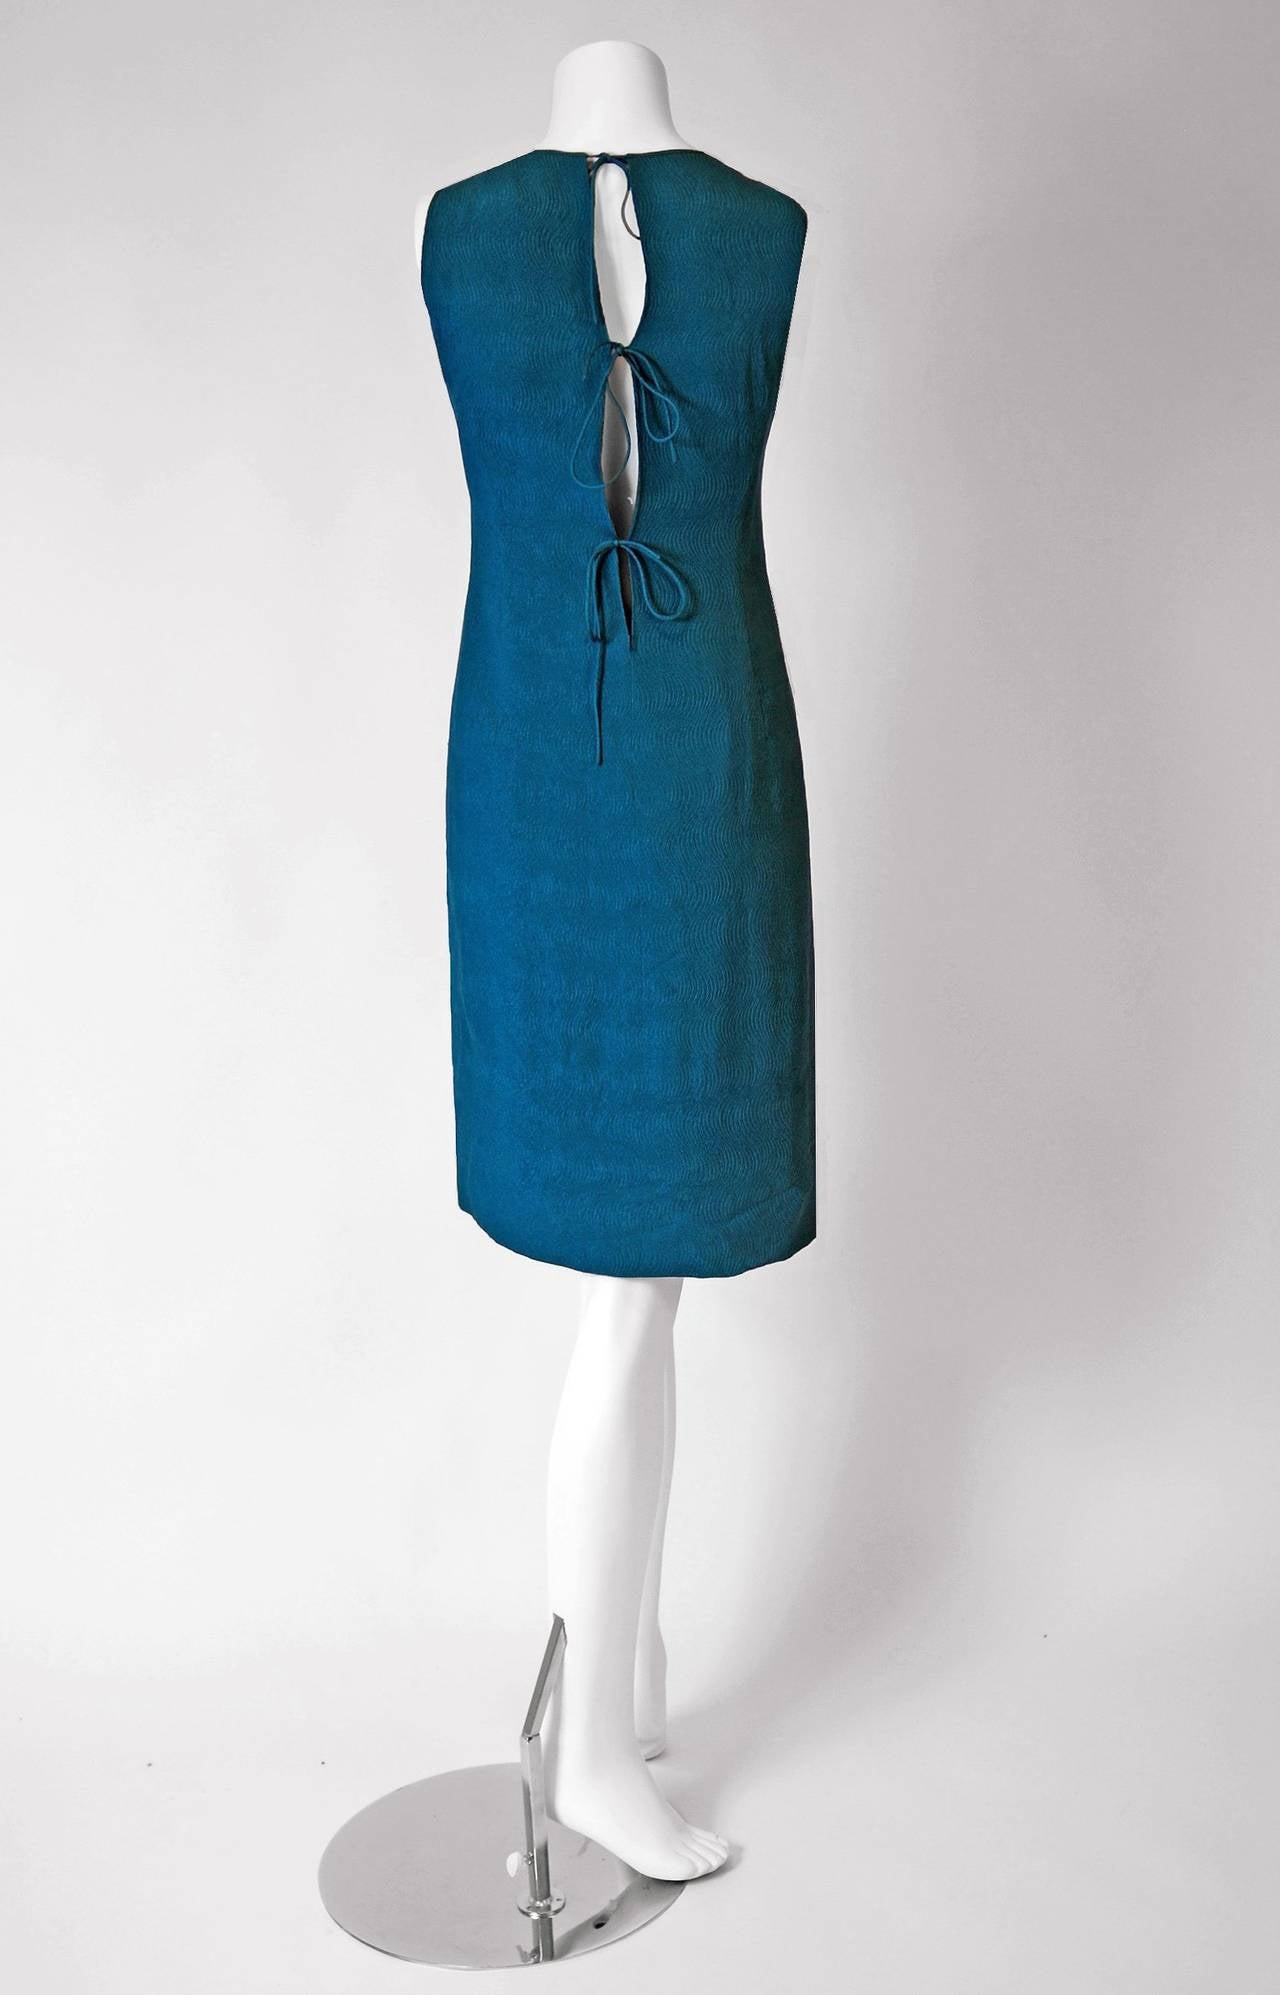 Women's 1966 Pierre Cardin Haute-Couture Sequin Teal Blue-Green Silk Mod Dress Ensemble